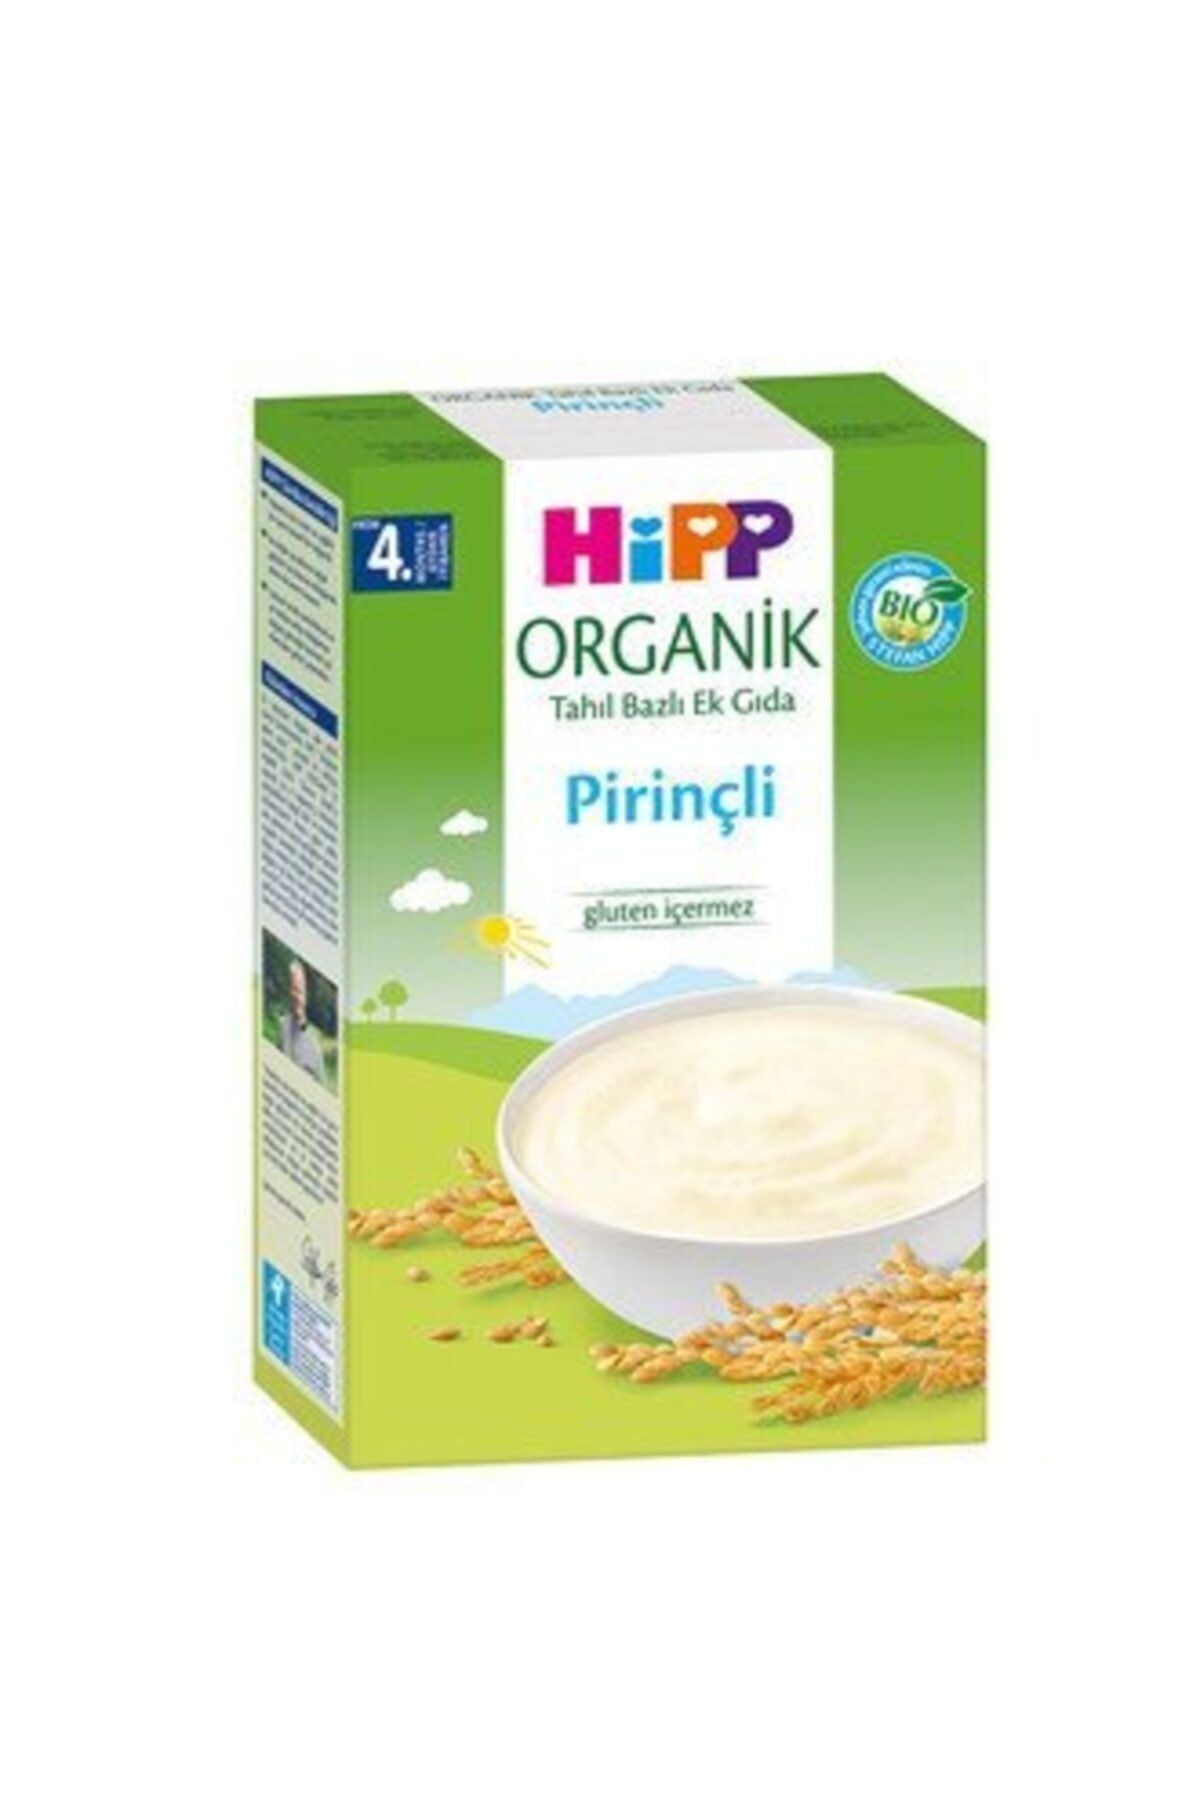 Hipp Hıpp Organik Kaşık Pirinçli Tahıllı 200 Gr